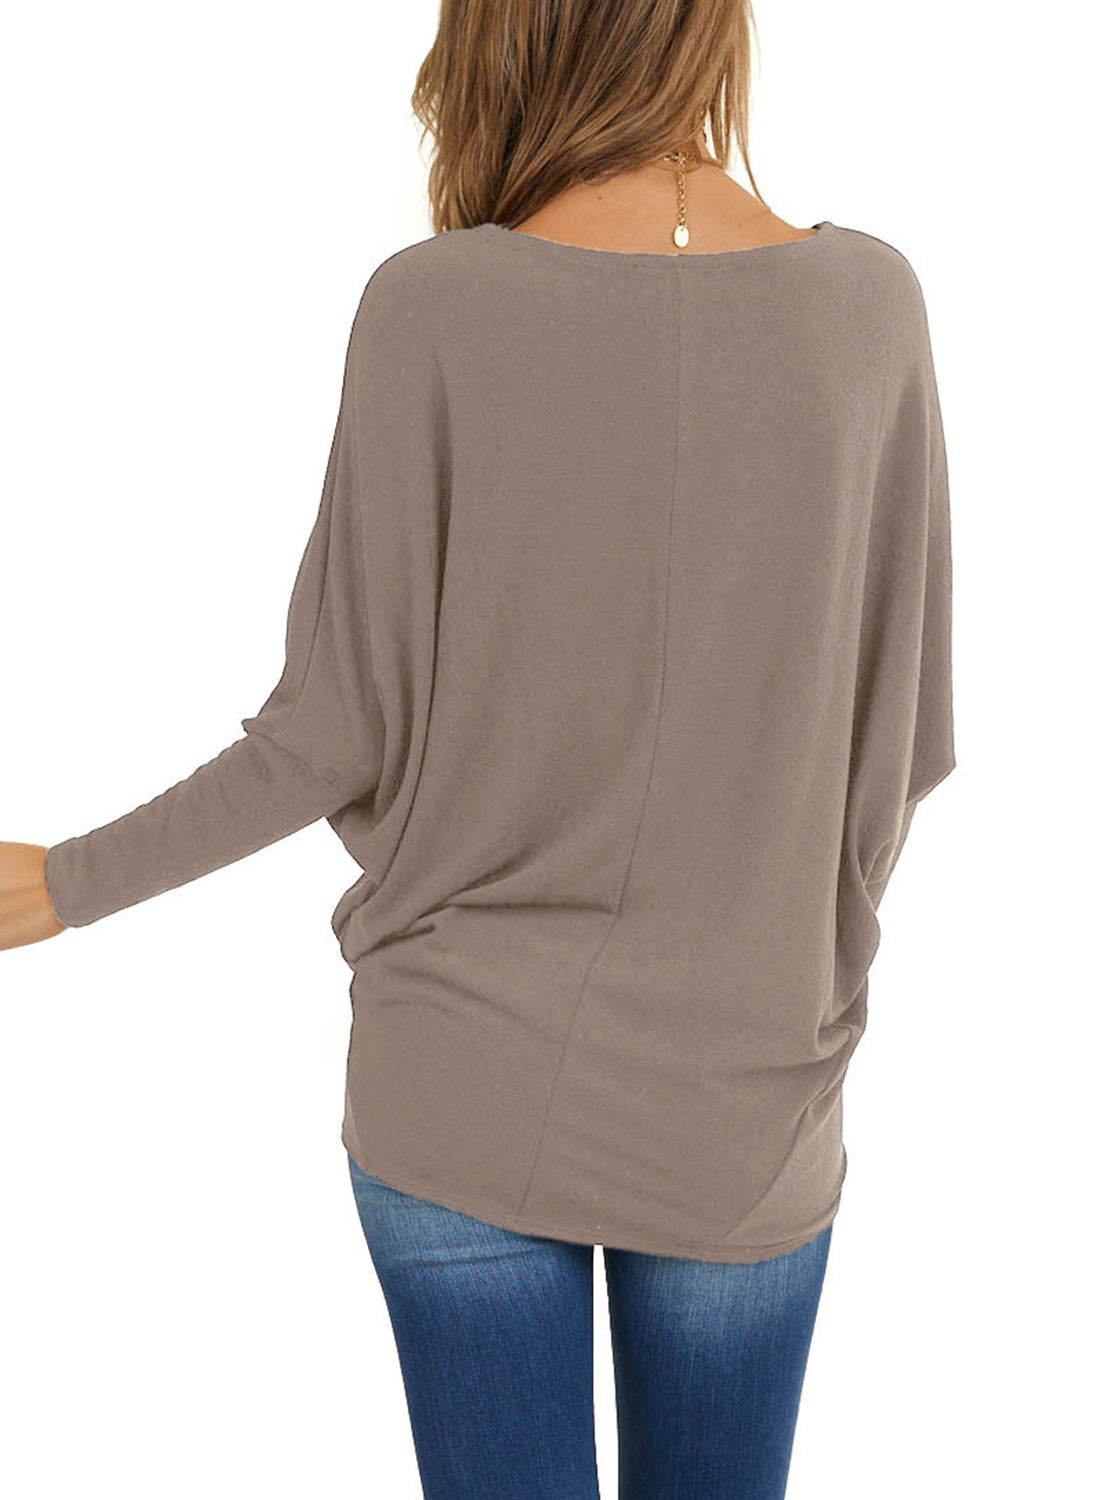 MIHOLL Womens Long Sleeve Batwing Casual Loose Dolman T-Shirt Blouse Tops